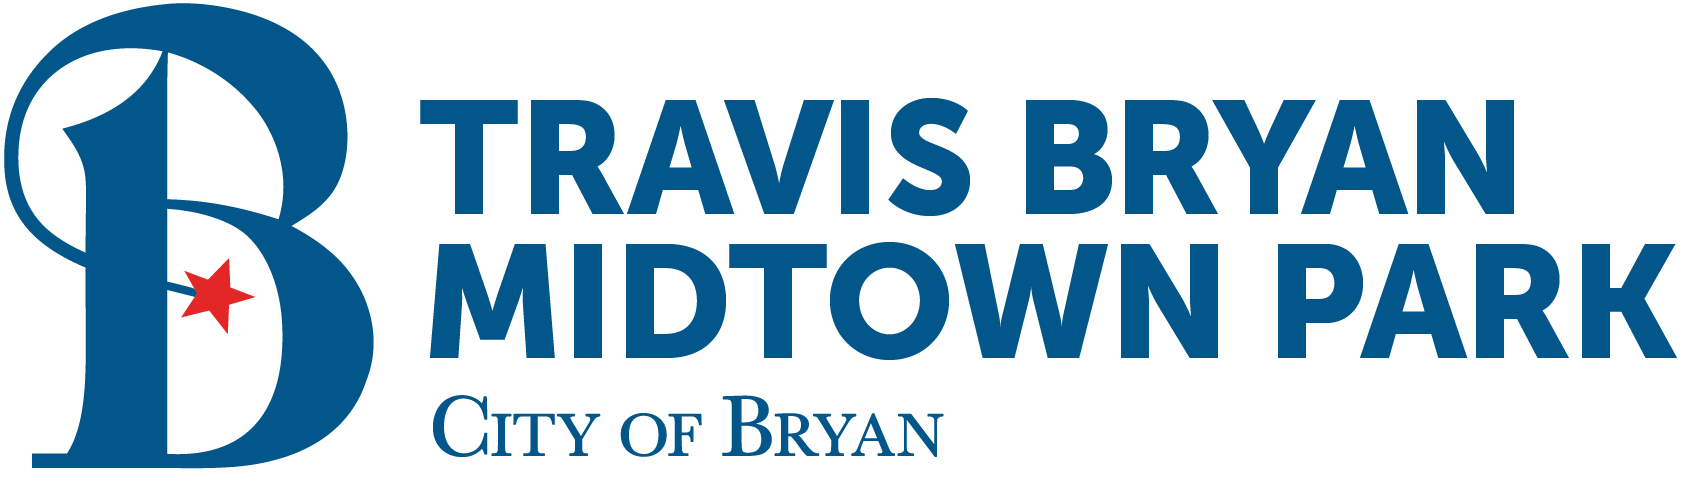 Travis Bryan Midtown Park Logo